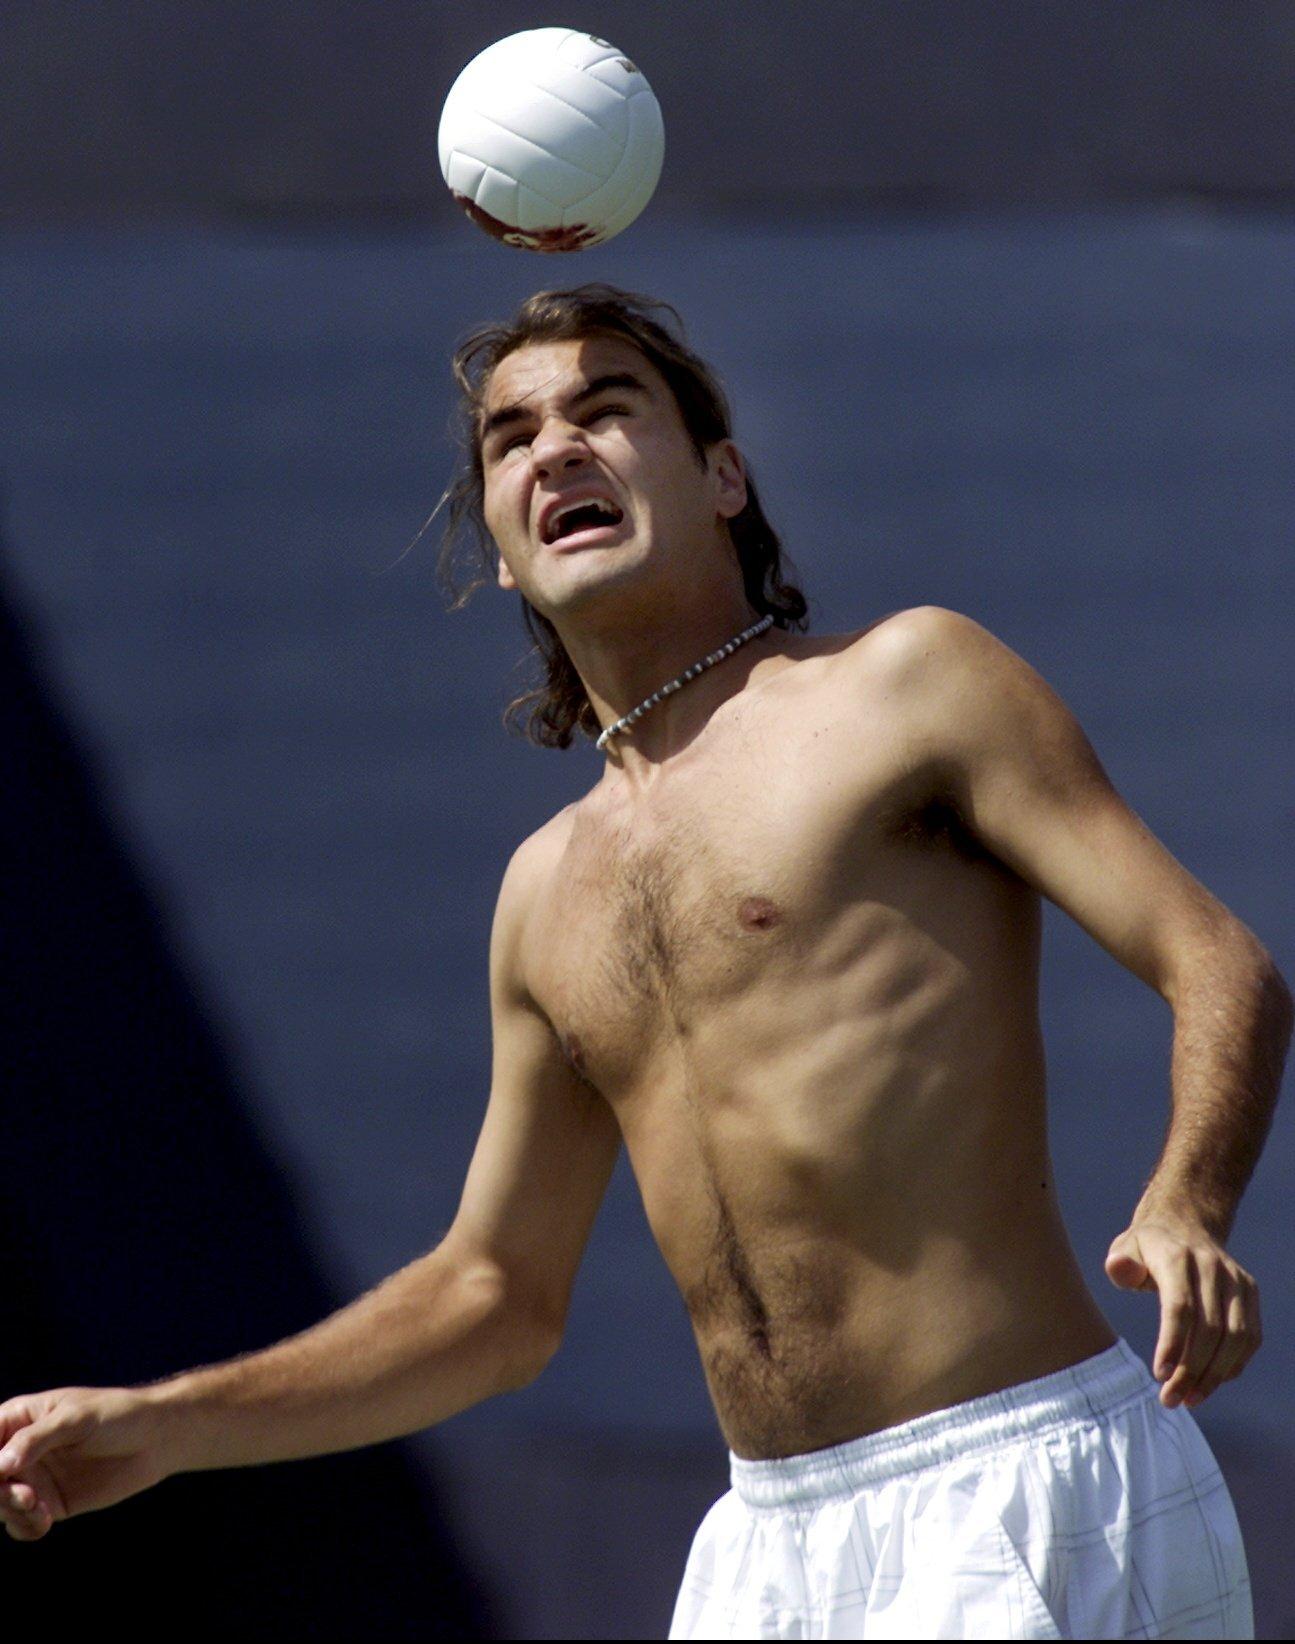 Federer bouncing football on head